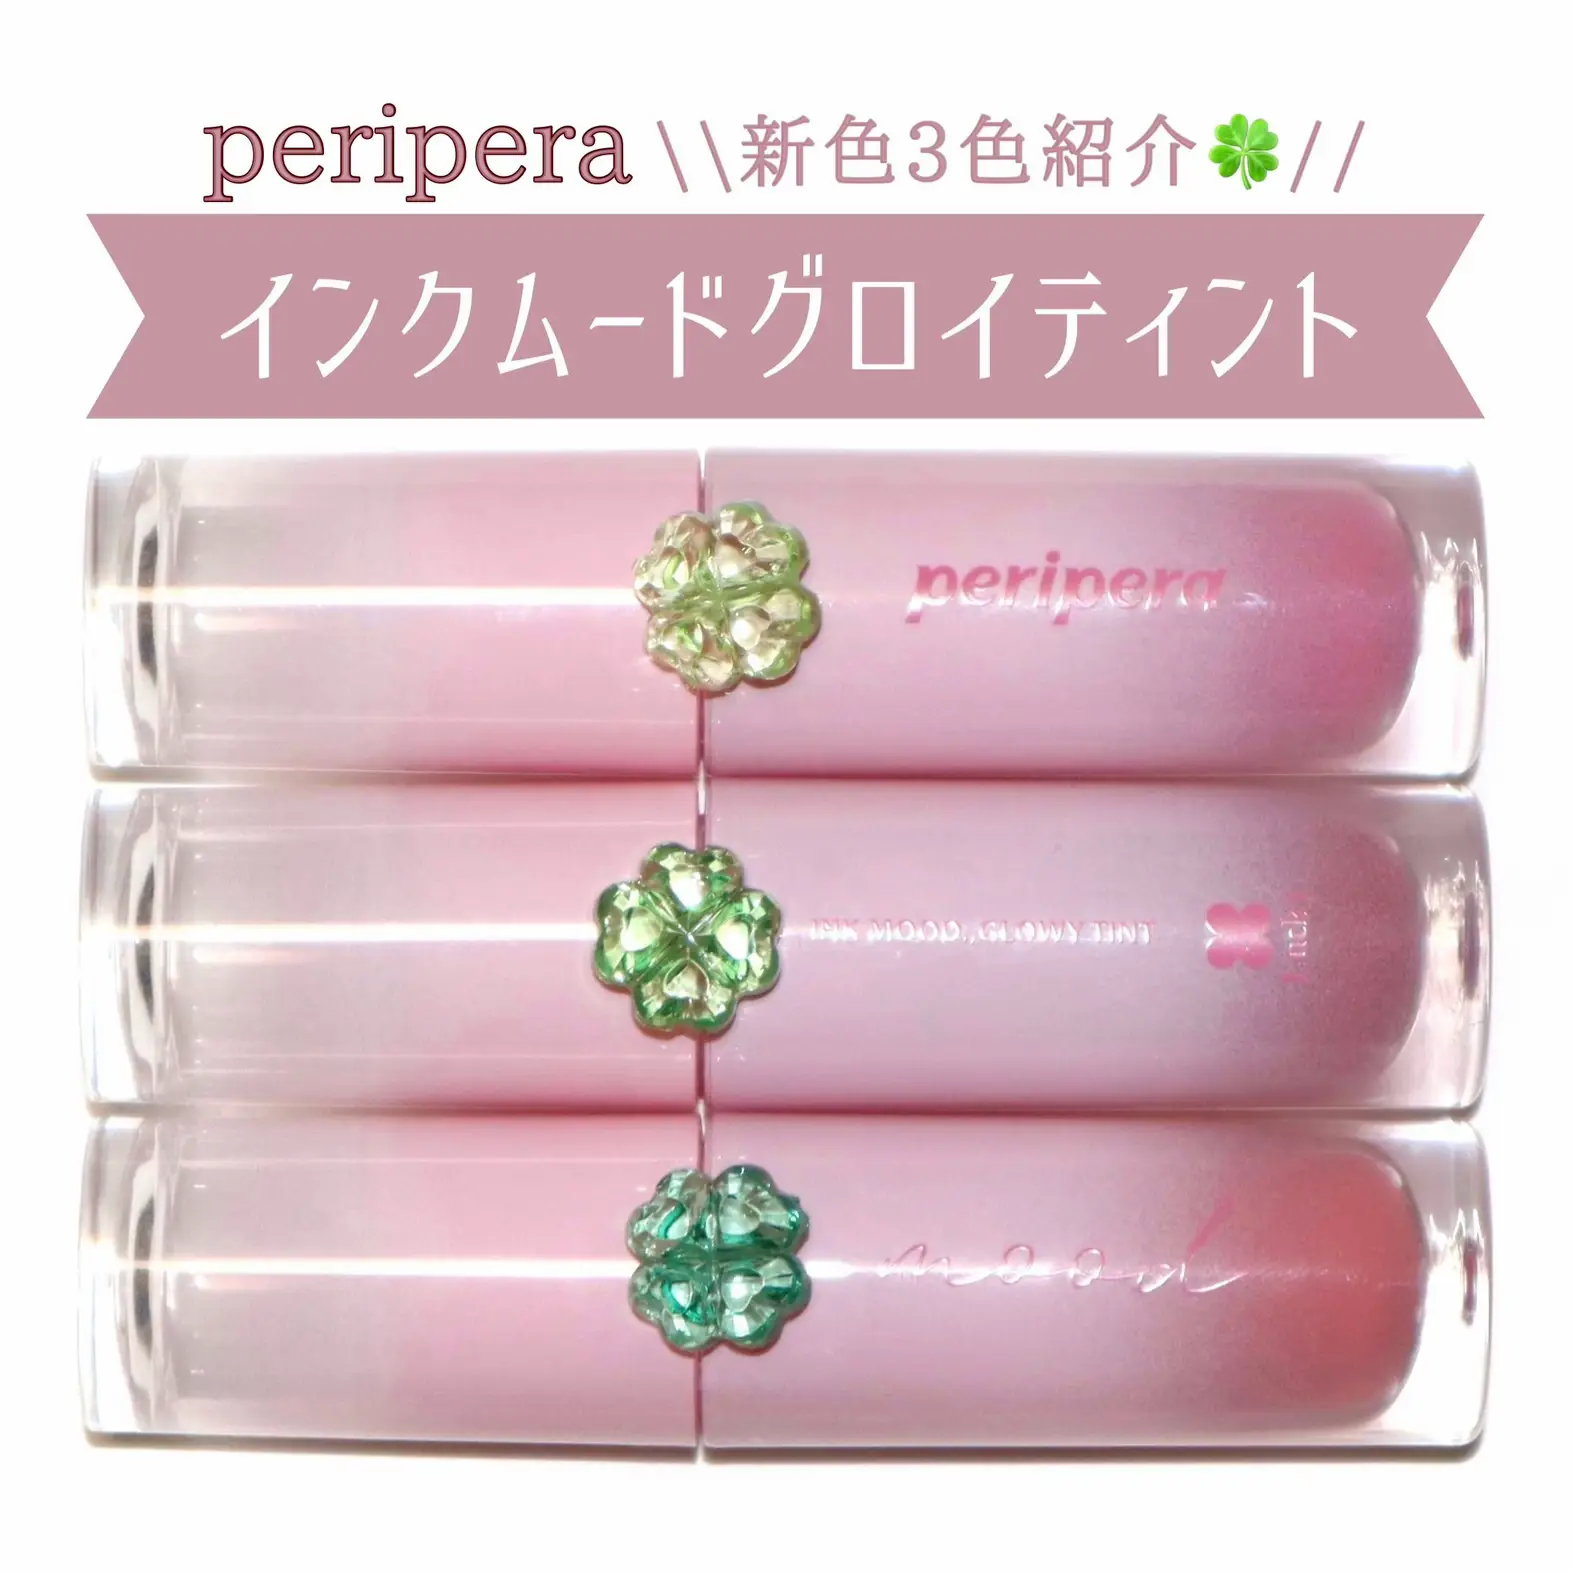 peripera インクムードグロイティント 新色3色紹介🍀 | 本田ユニが投稿